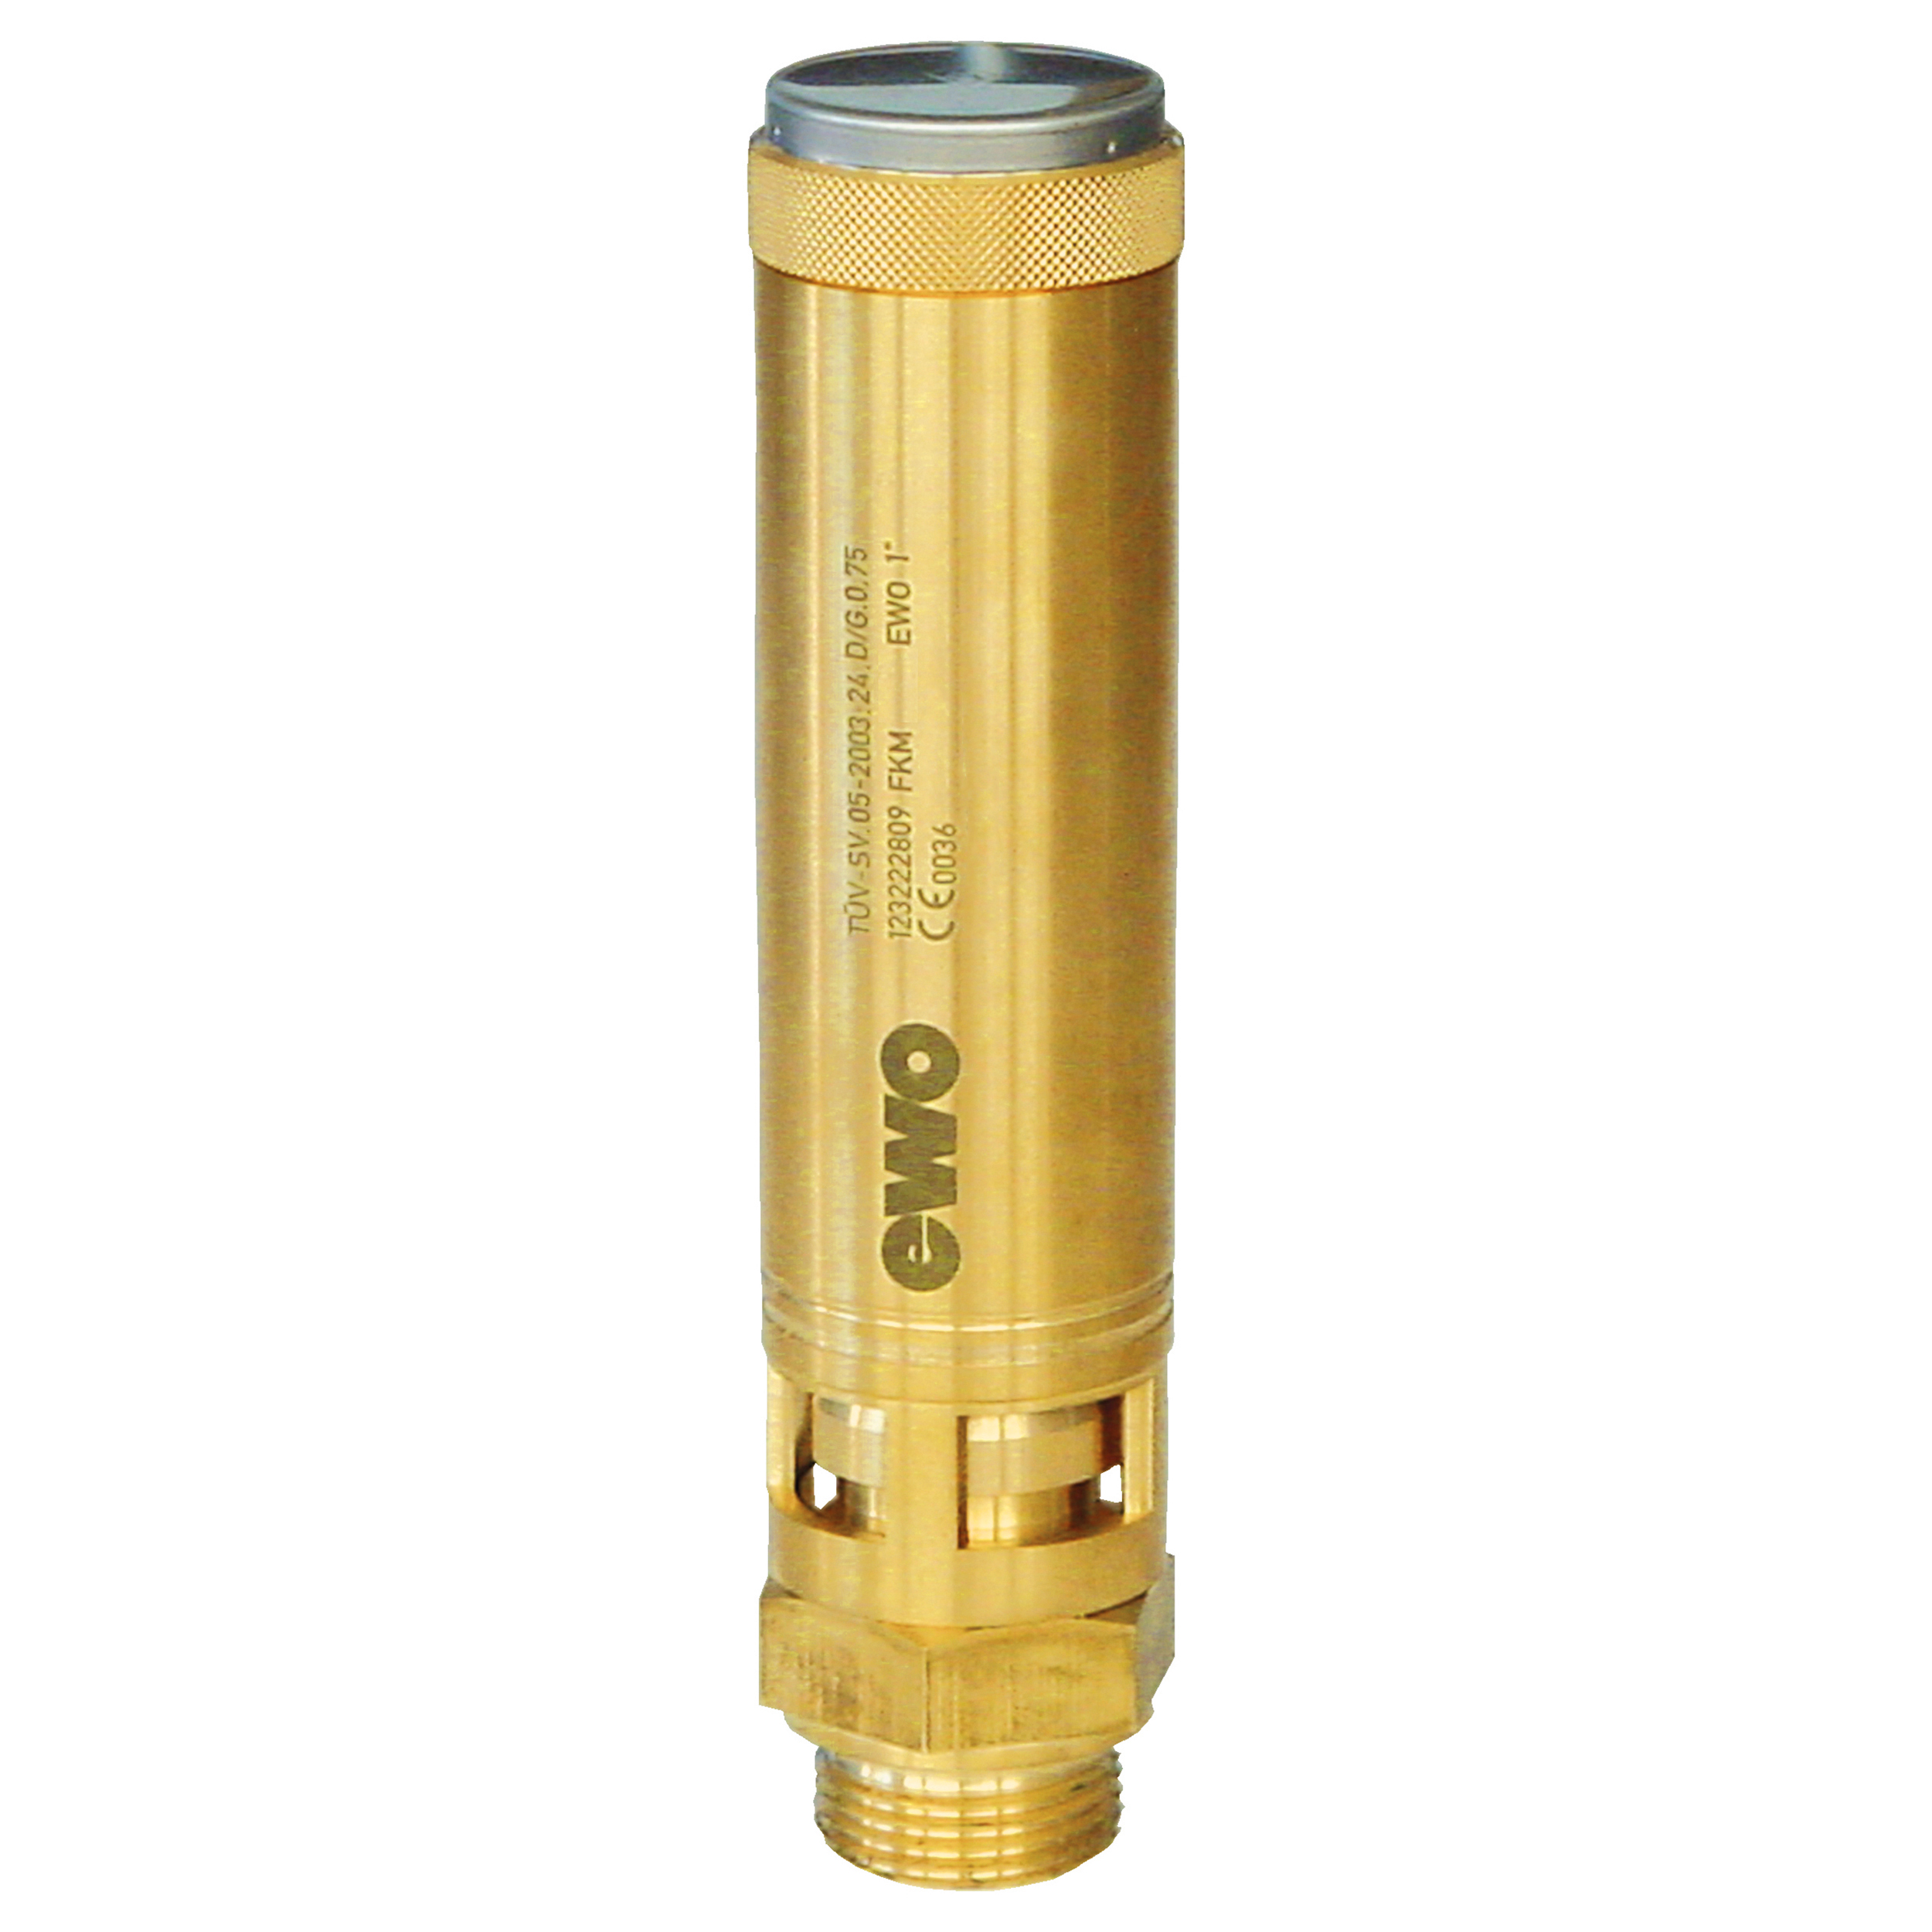 Savety valve component tested, D/G, G2, DN 48, L: 215 mm, seal: FKM, set pressure 0.2–30 bar